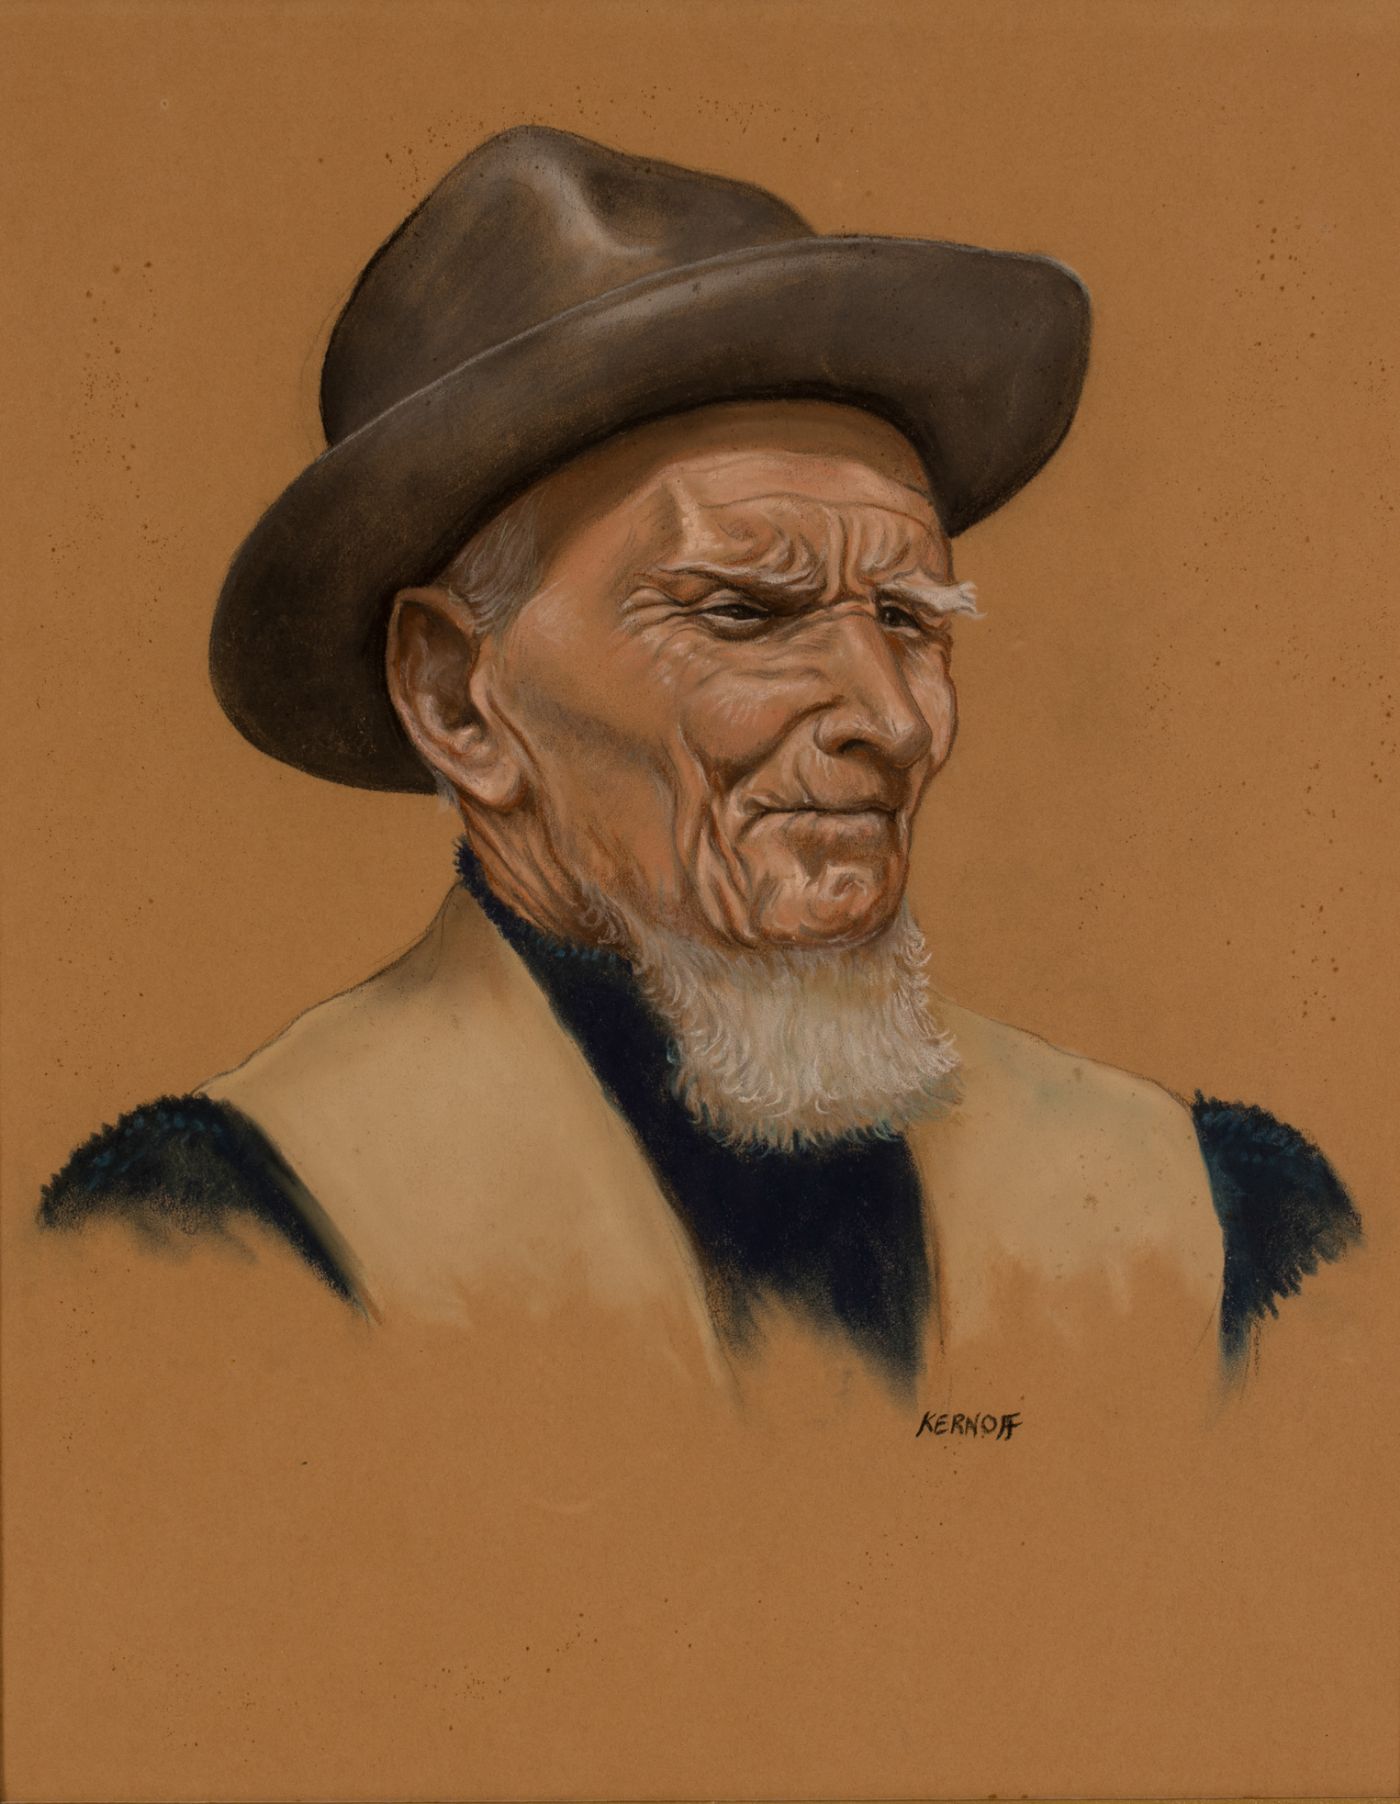 MAN OF ARAN by Harry Kernoff RHA at Dolan's Art Auction House